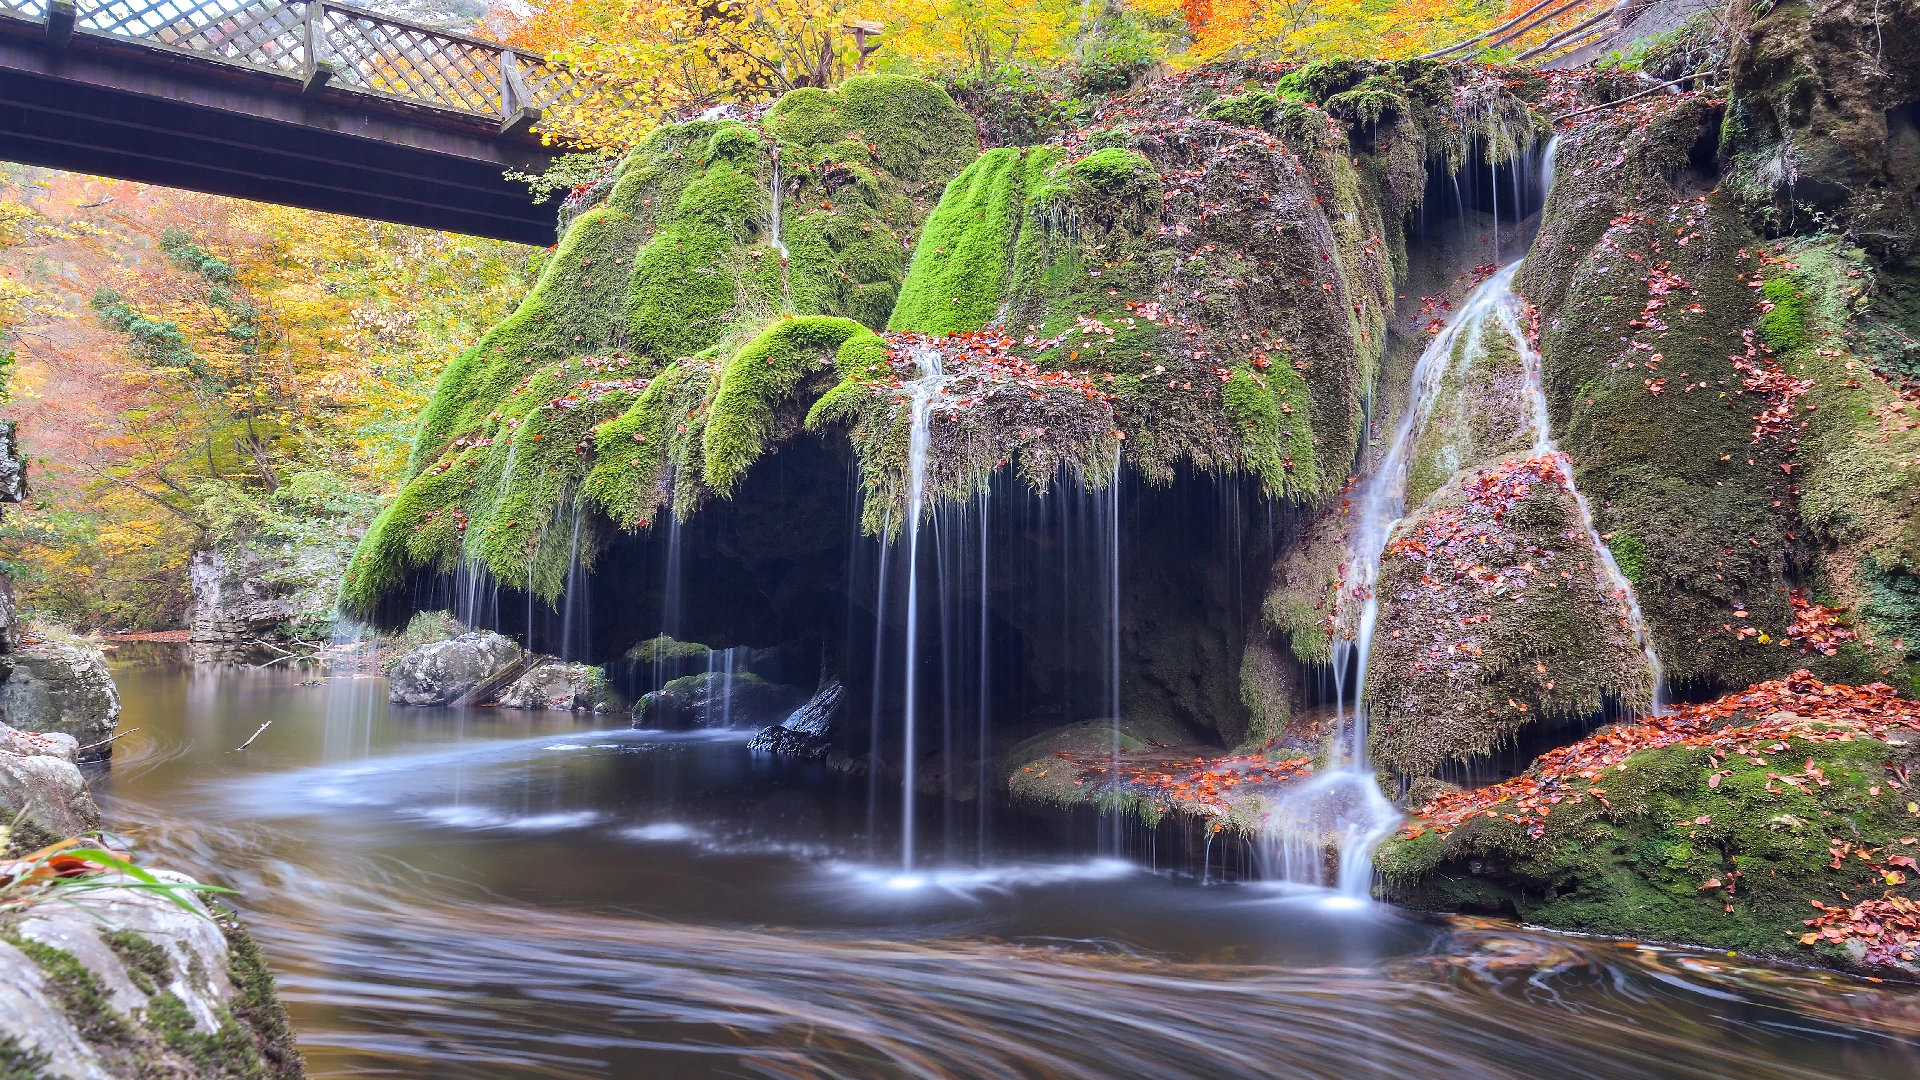 bigar waterfall